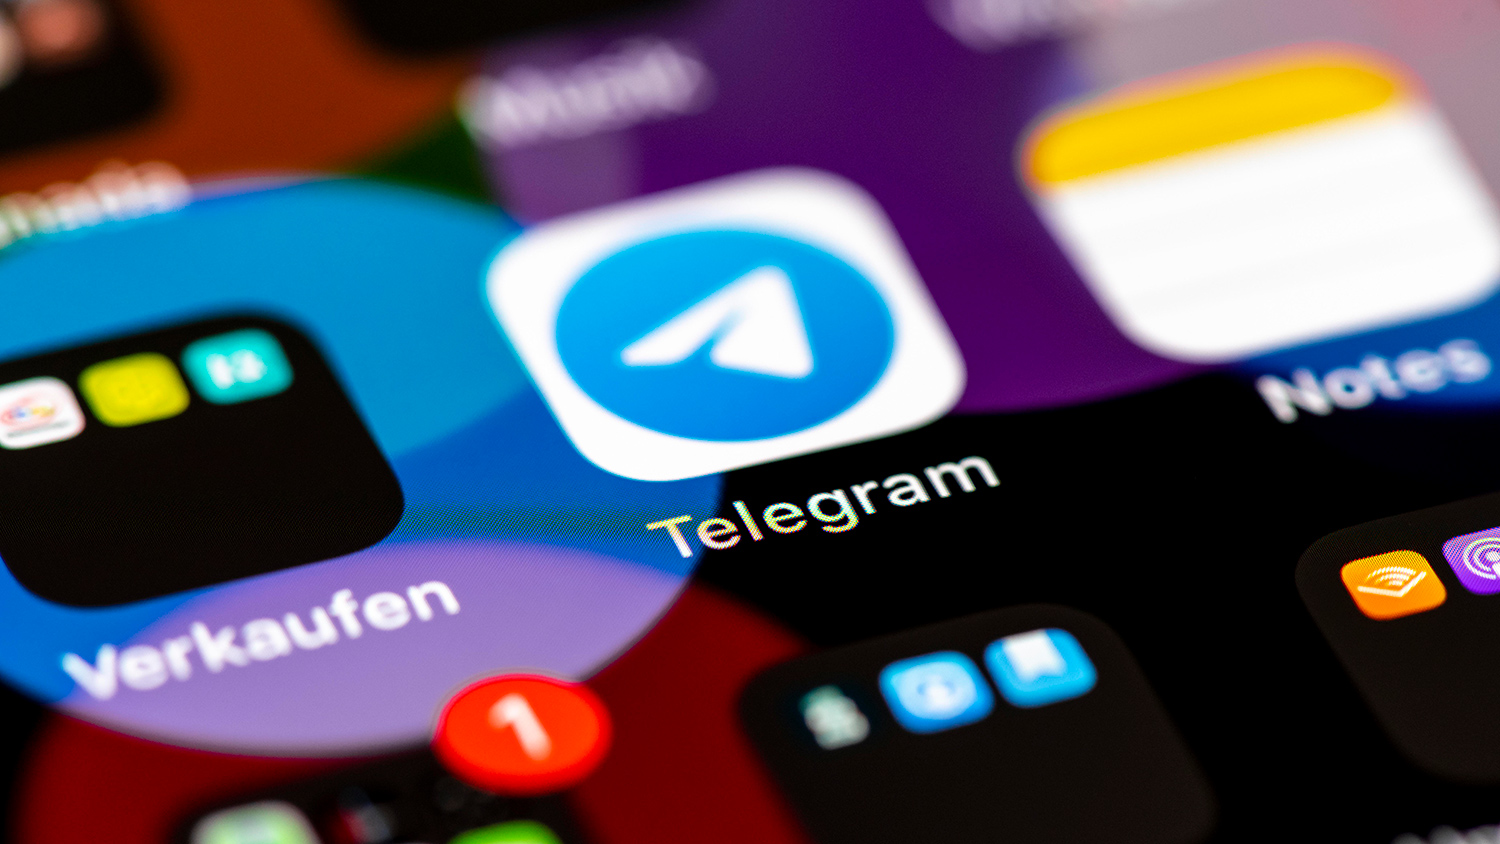 Telegram, Messenger App, App Icons on a mobile phone display, iPhone, Smartphone, close-up, format filling - iblmmw05781297.jpg